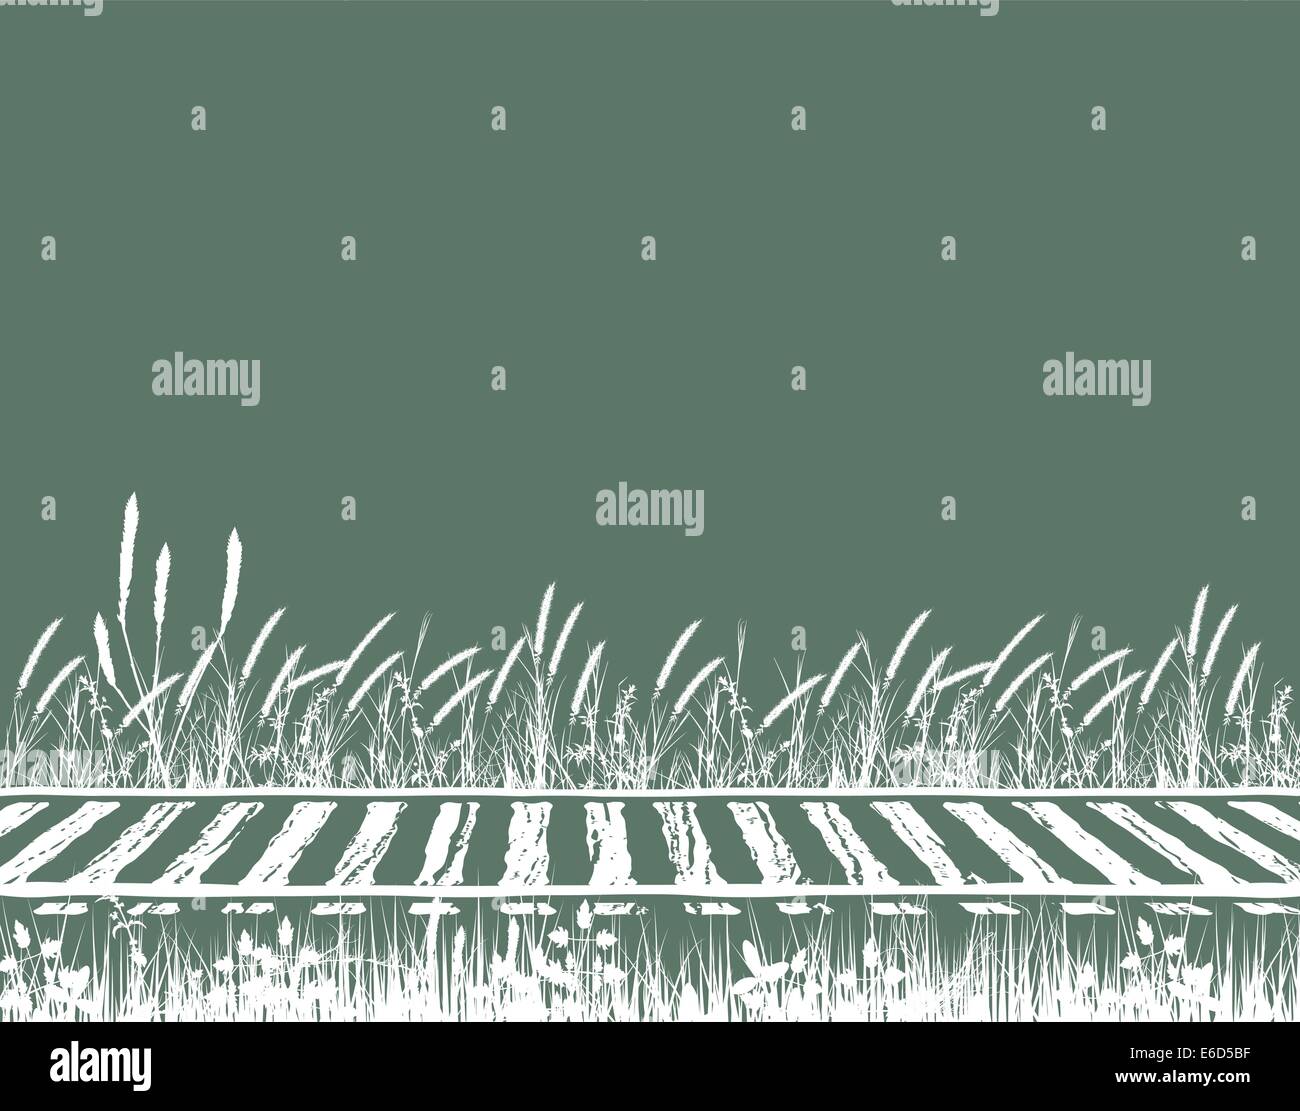 Editable vector illustration of grassy railway tracks Stock Vector